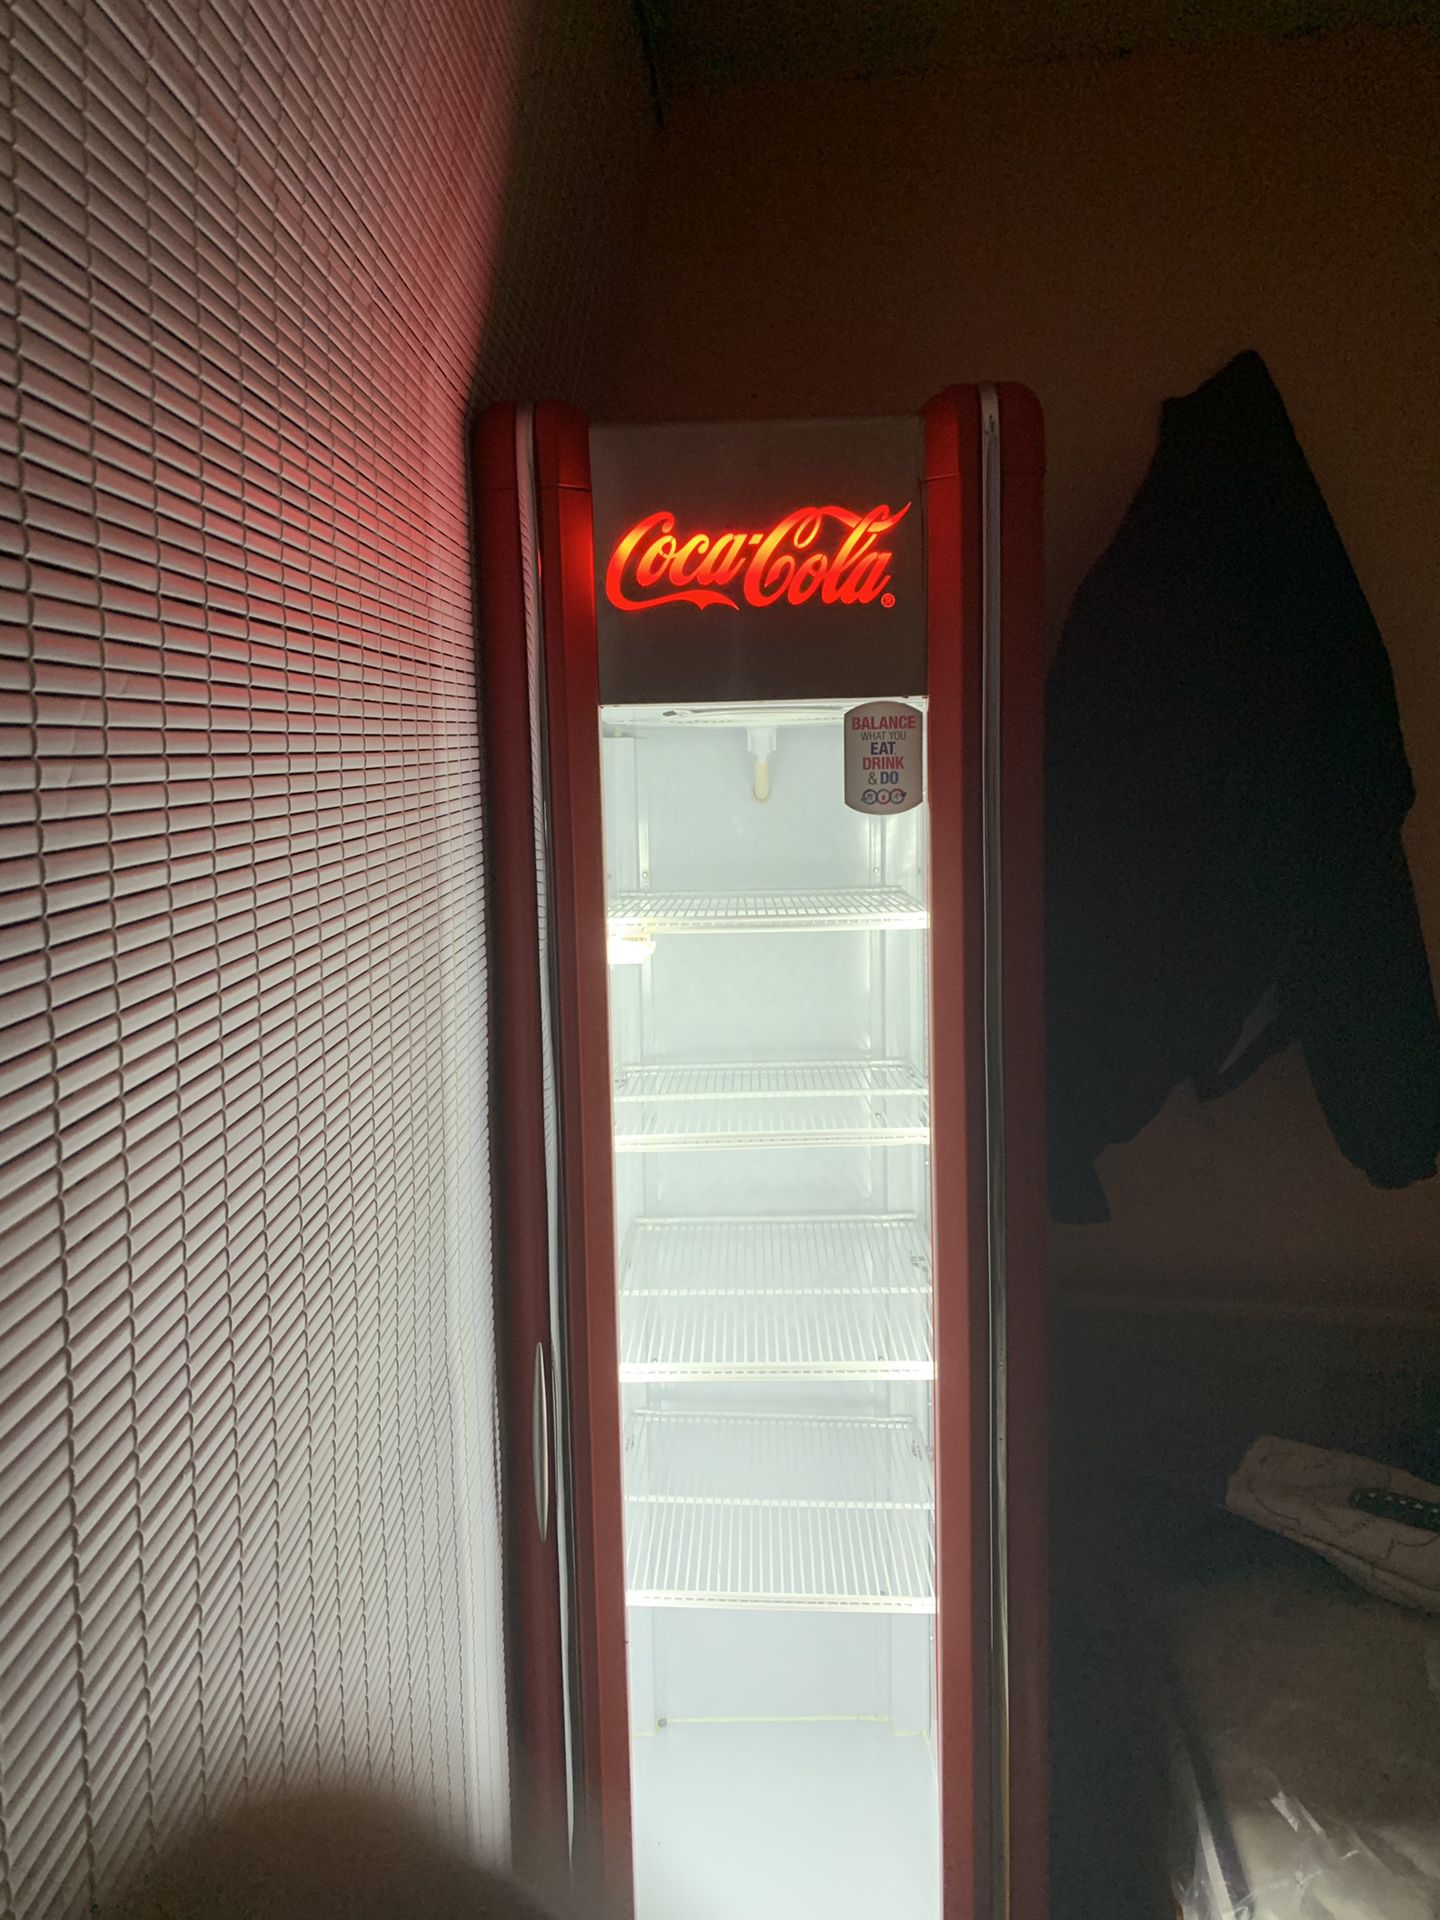 Coca Cola rare collectible refrigerator